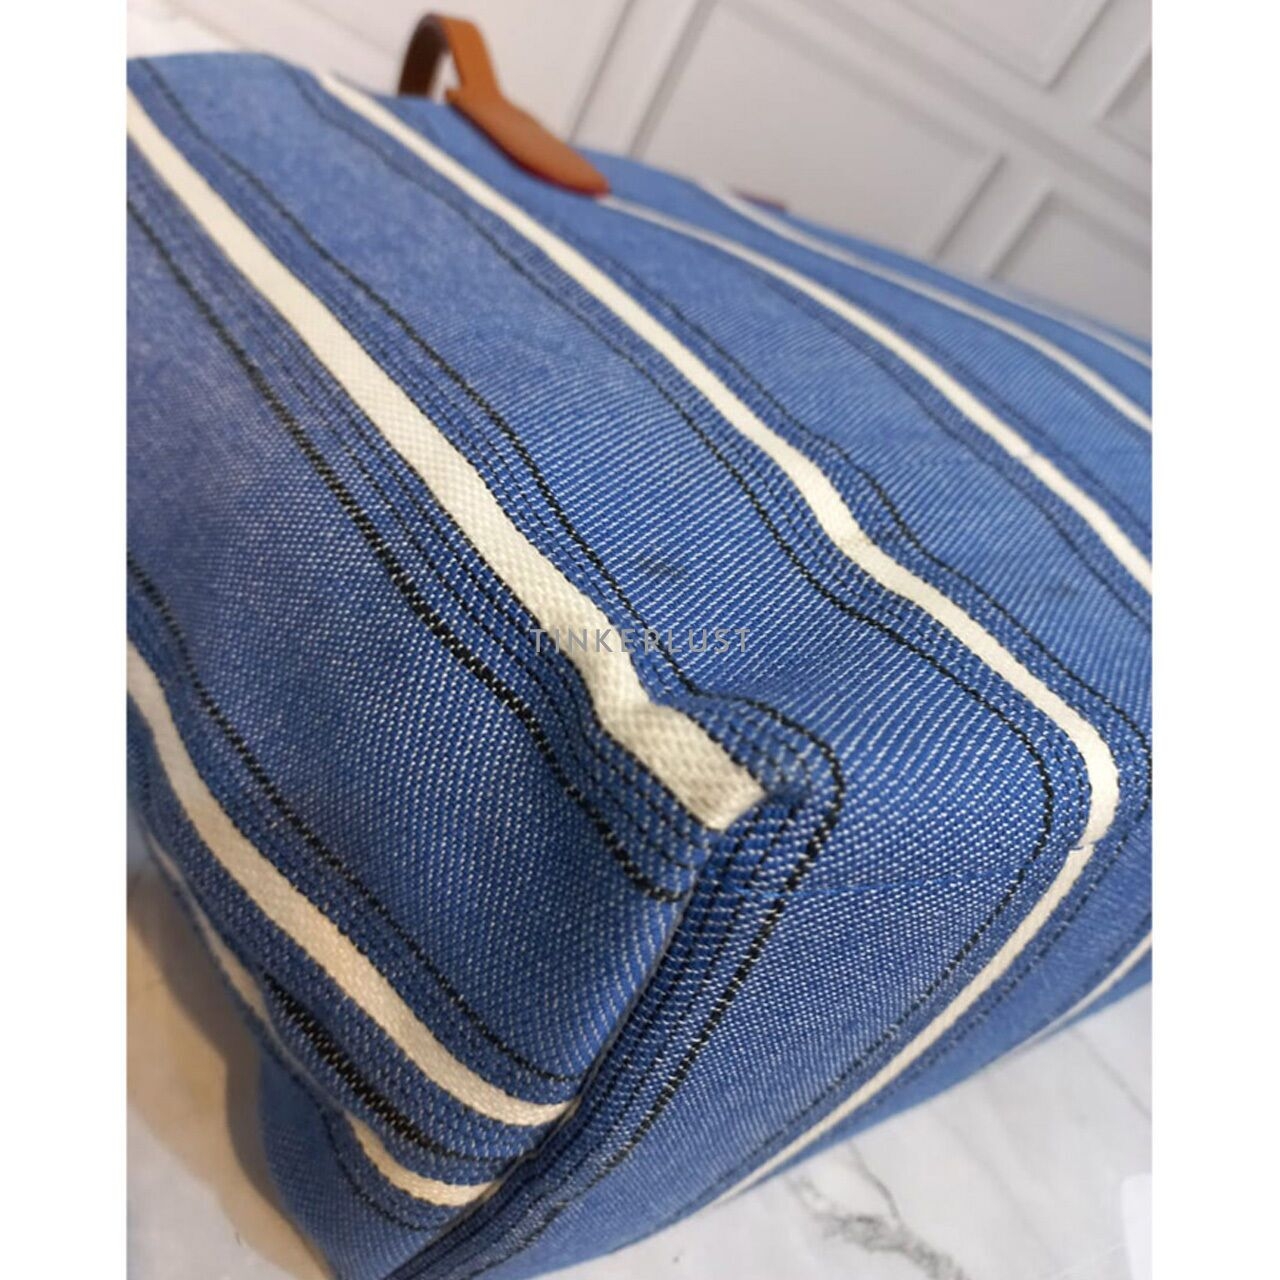 Longchamp Roseau Essential Rayé Large Canvas Blue Stripe Tote Bag